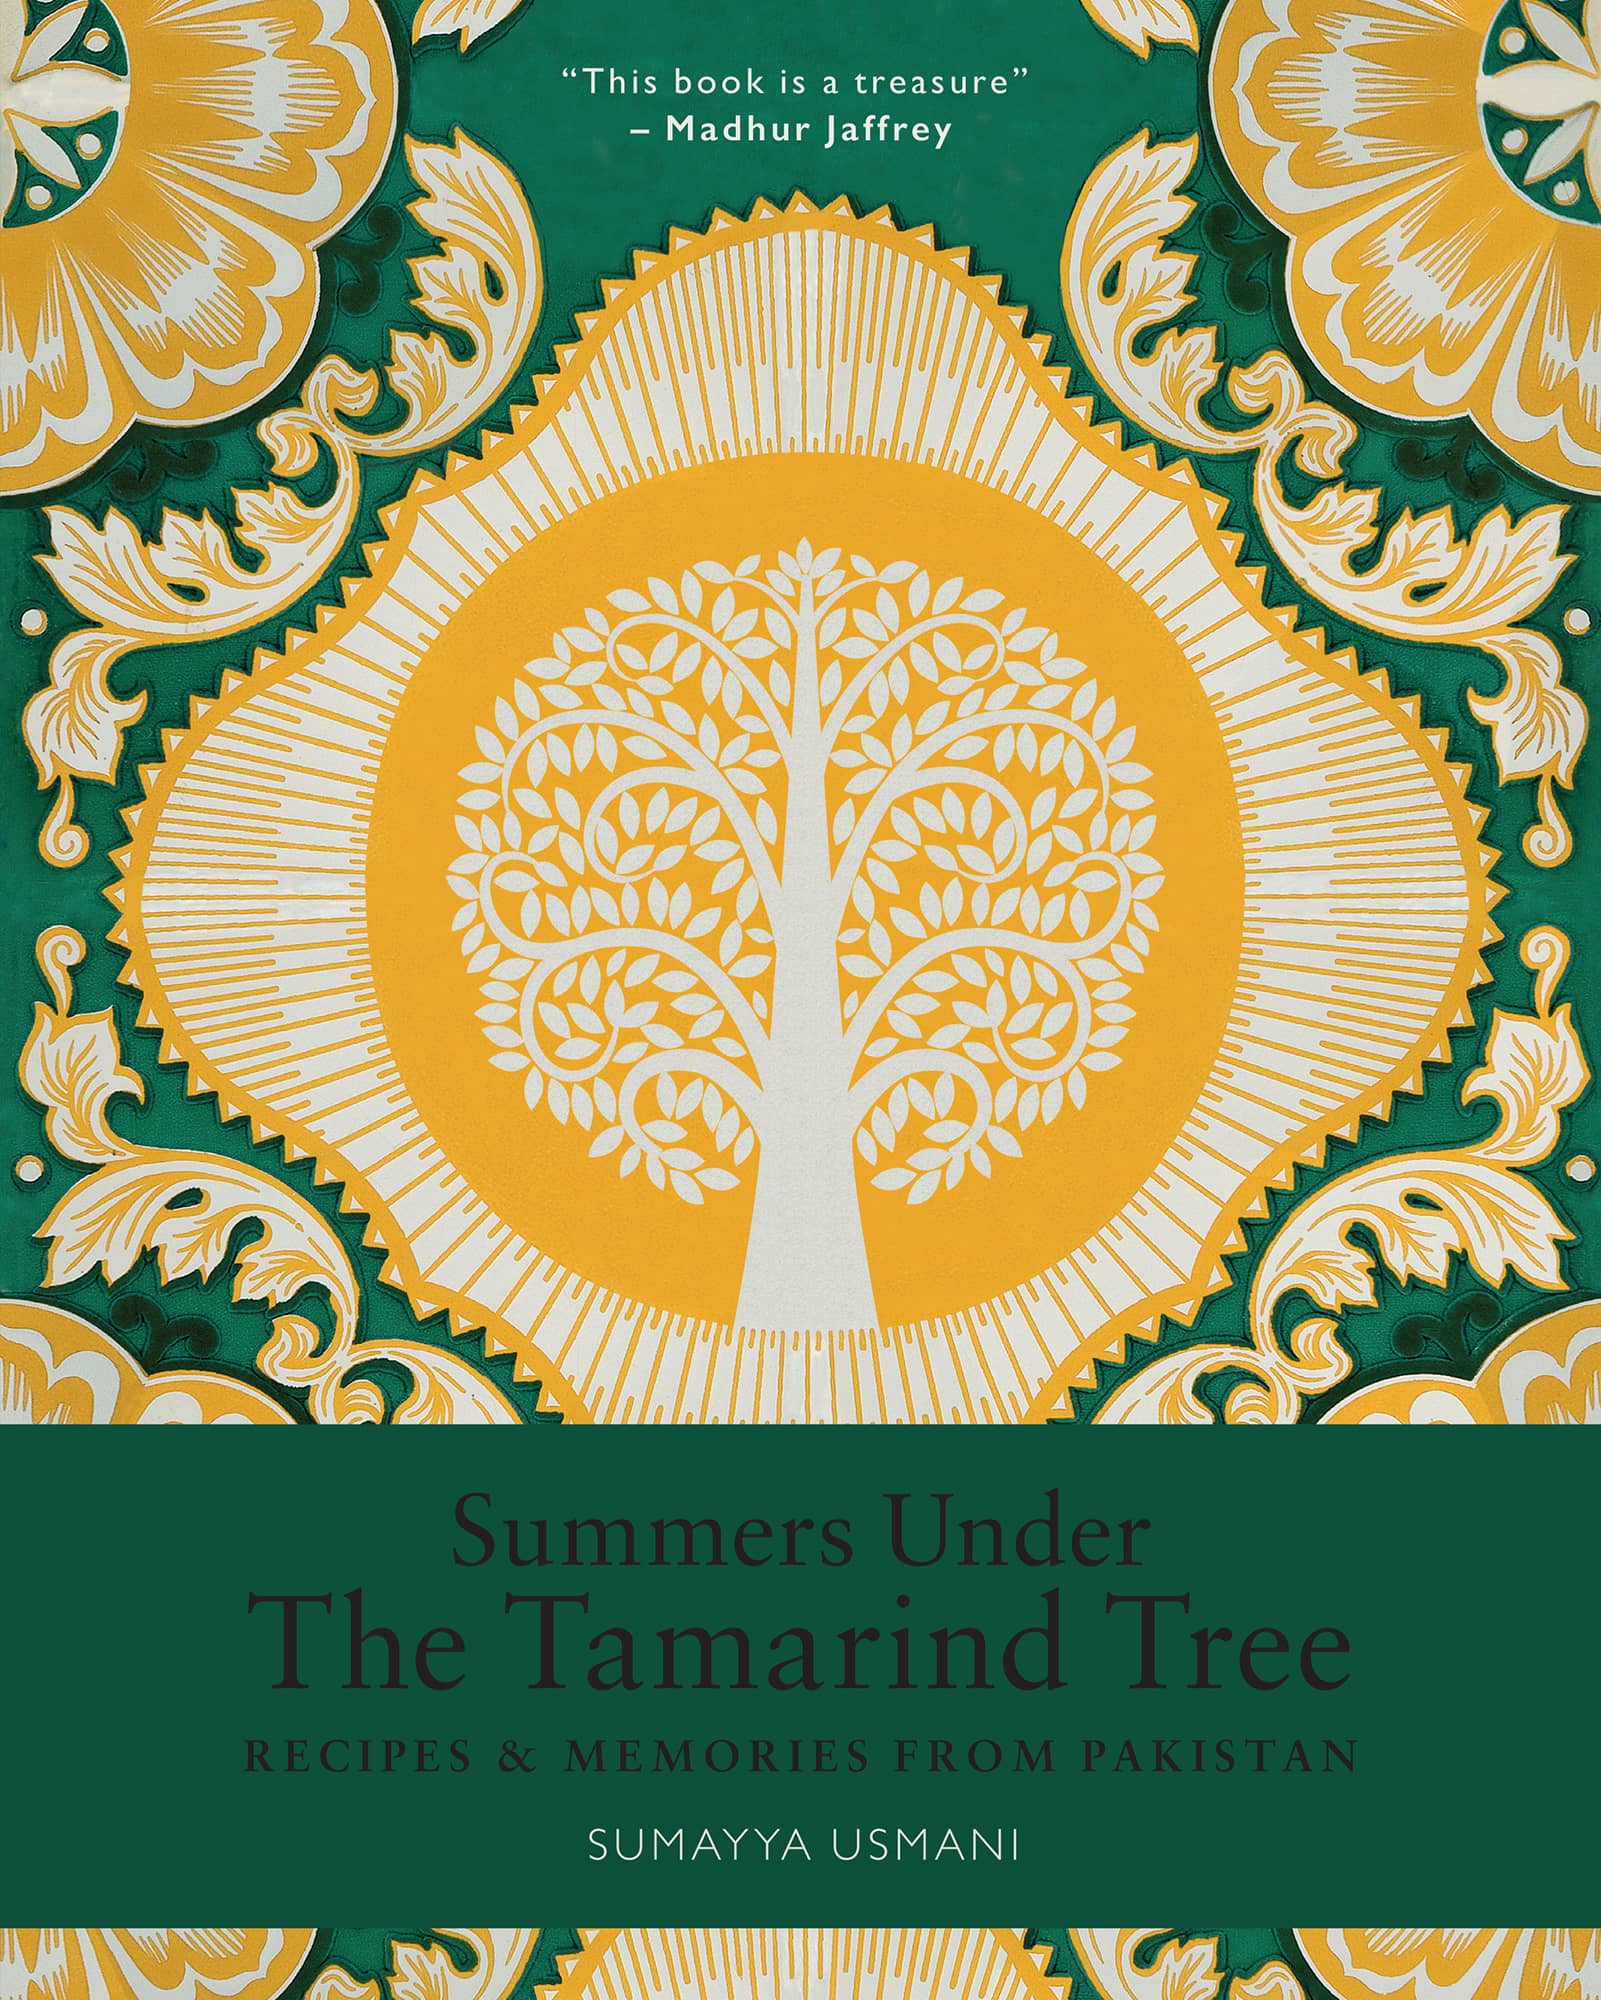 Summers Under The Tamarind Tree RECIPES MEMORIES FROM PAKISTAN SUMAYYA USMANI - photo 1